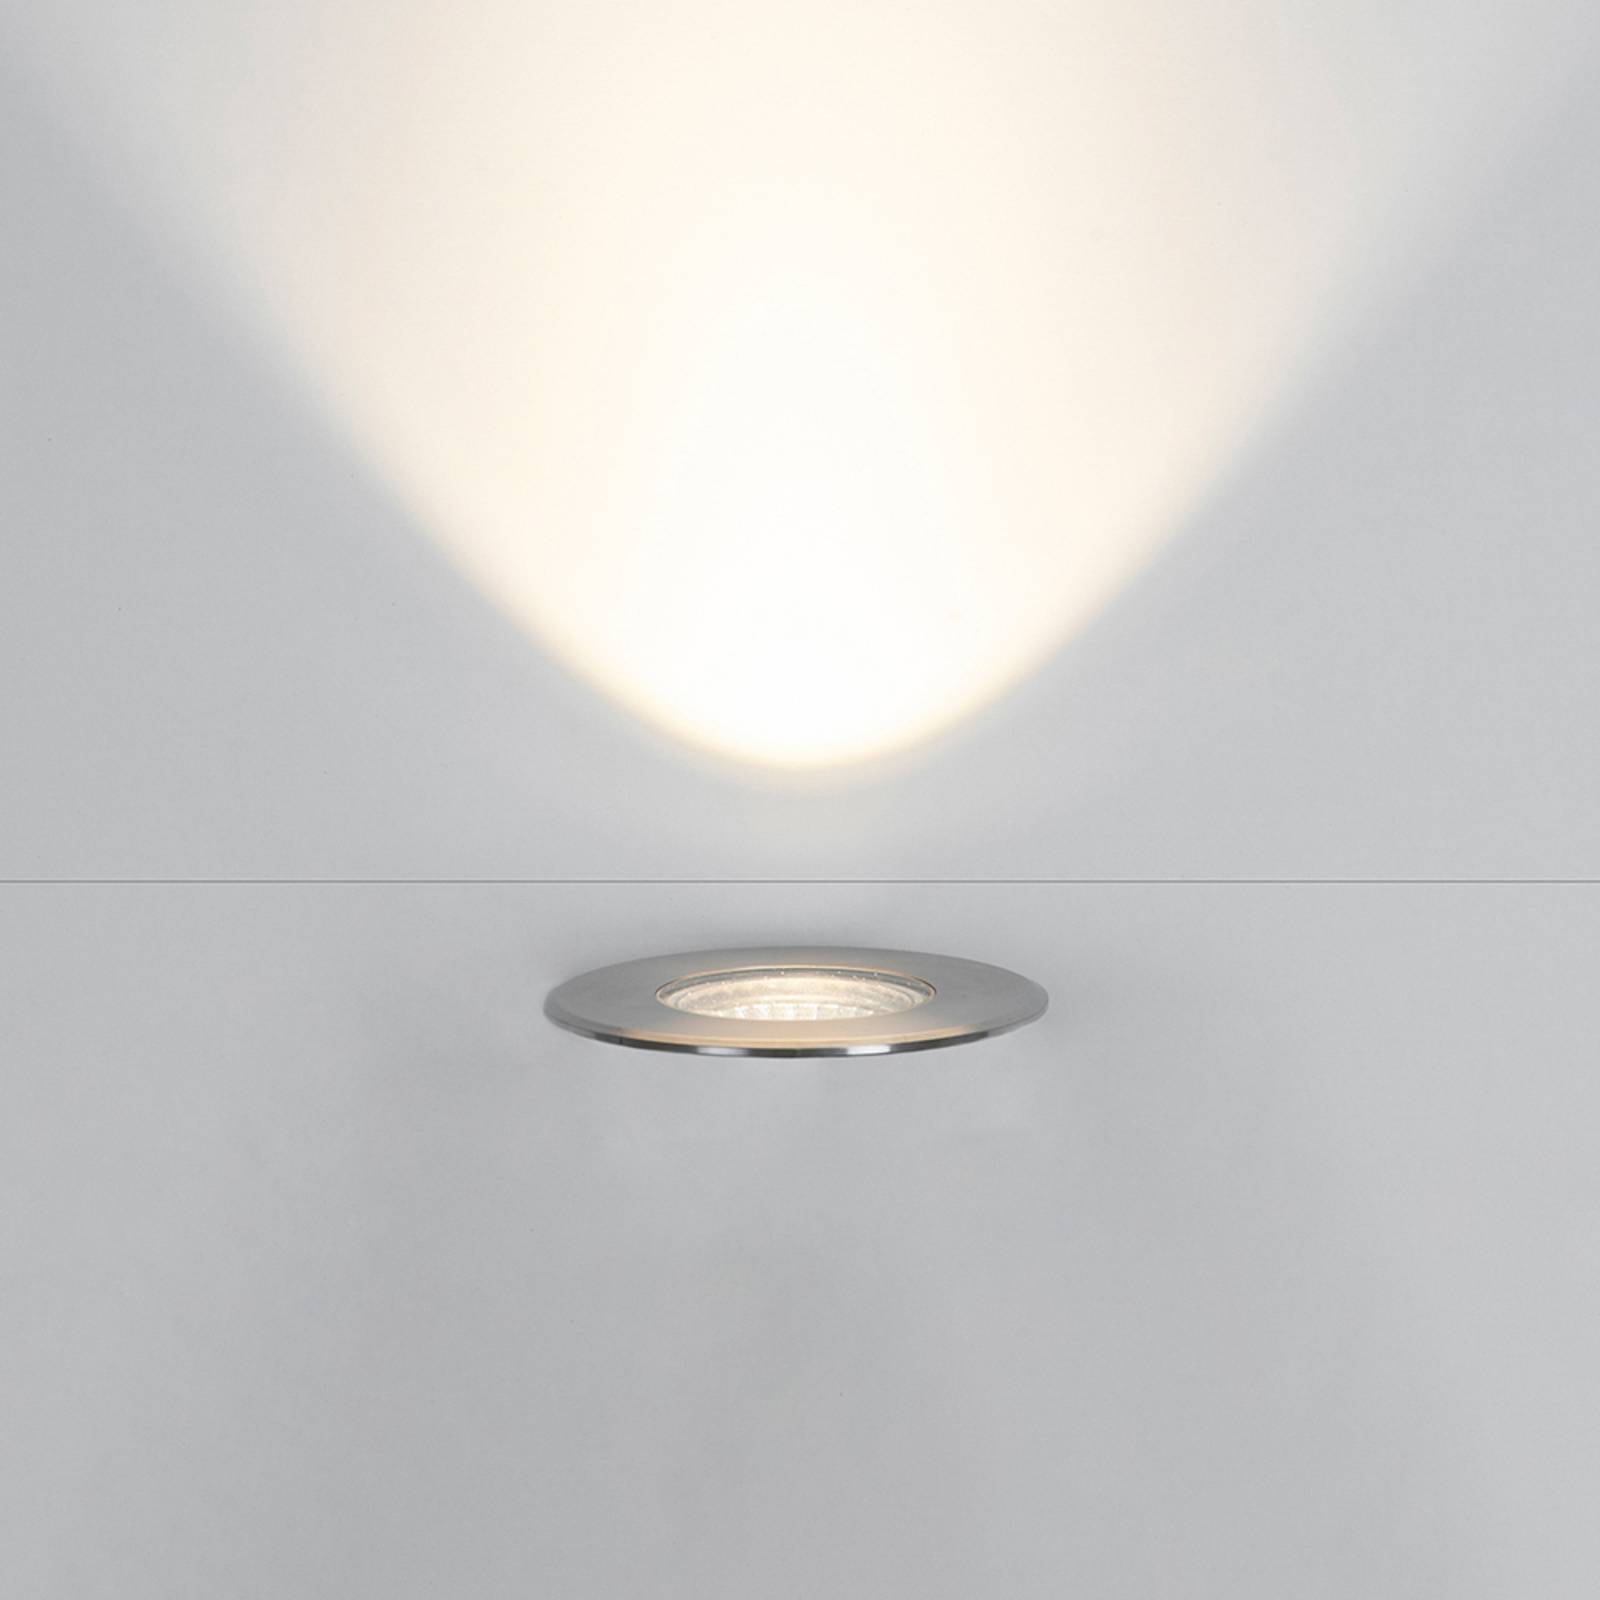 BRUMBERG Boled LED indbygningslampe, Ø 11 cm, 15 W